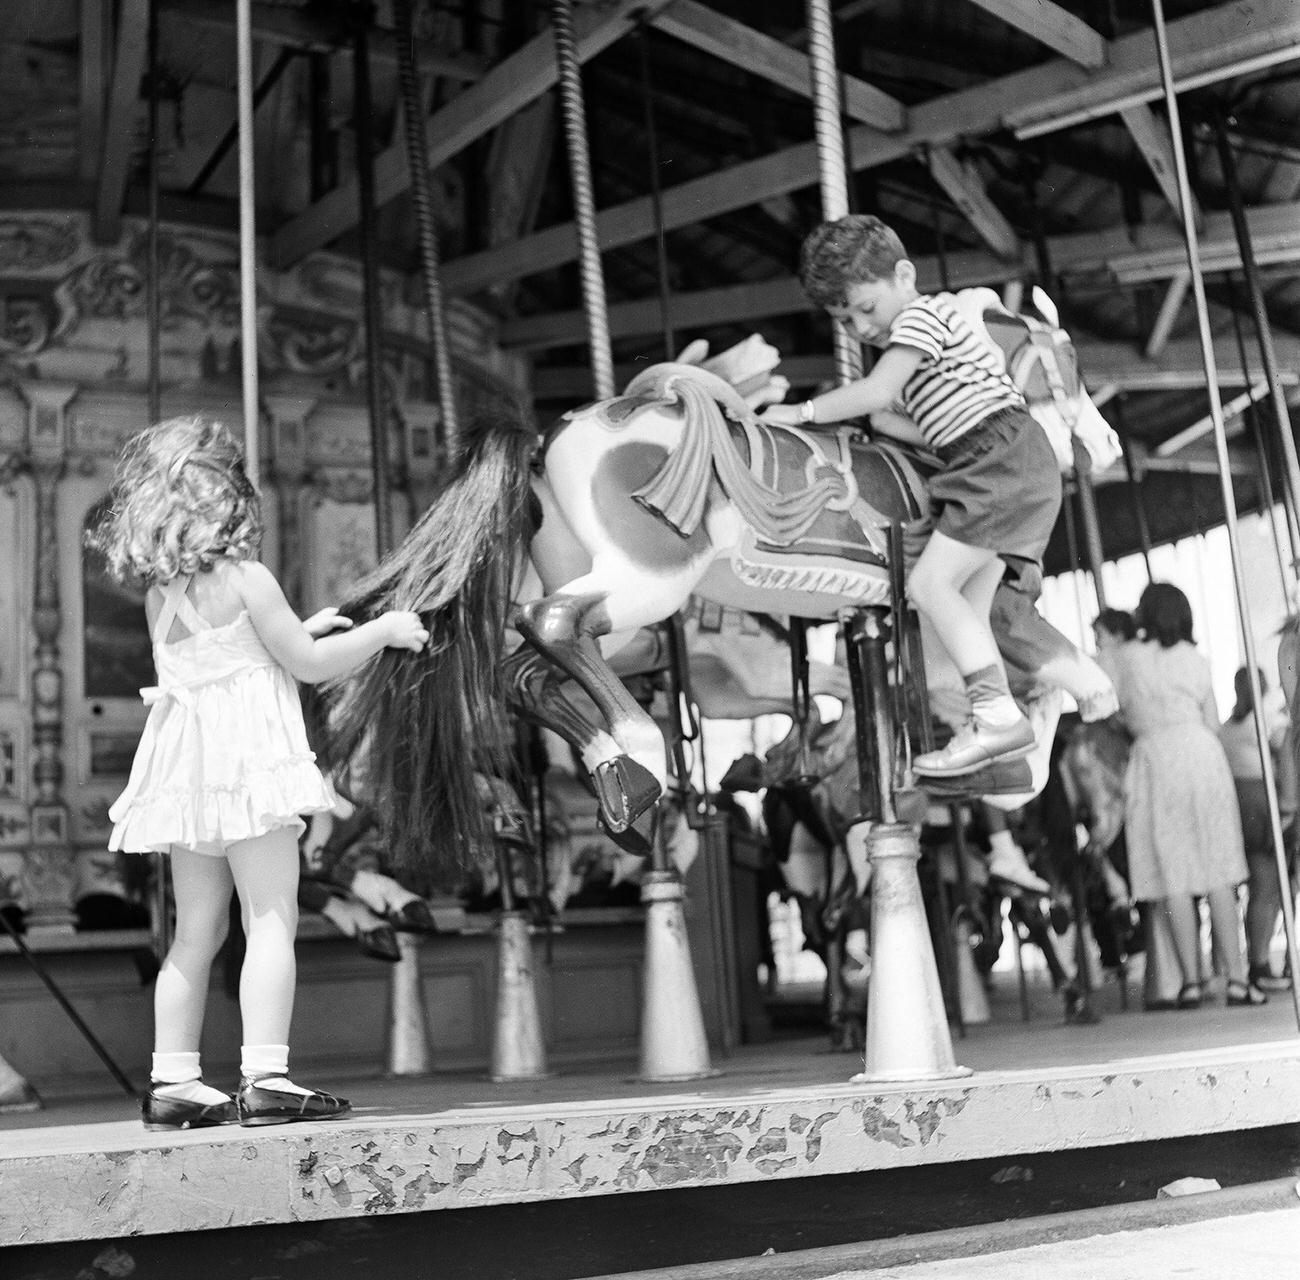 Siblings At Carousel, Boy Climbing On Horse, 1948